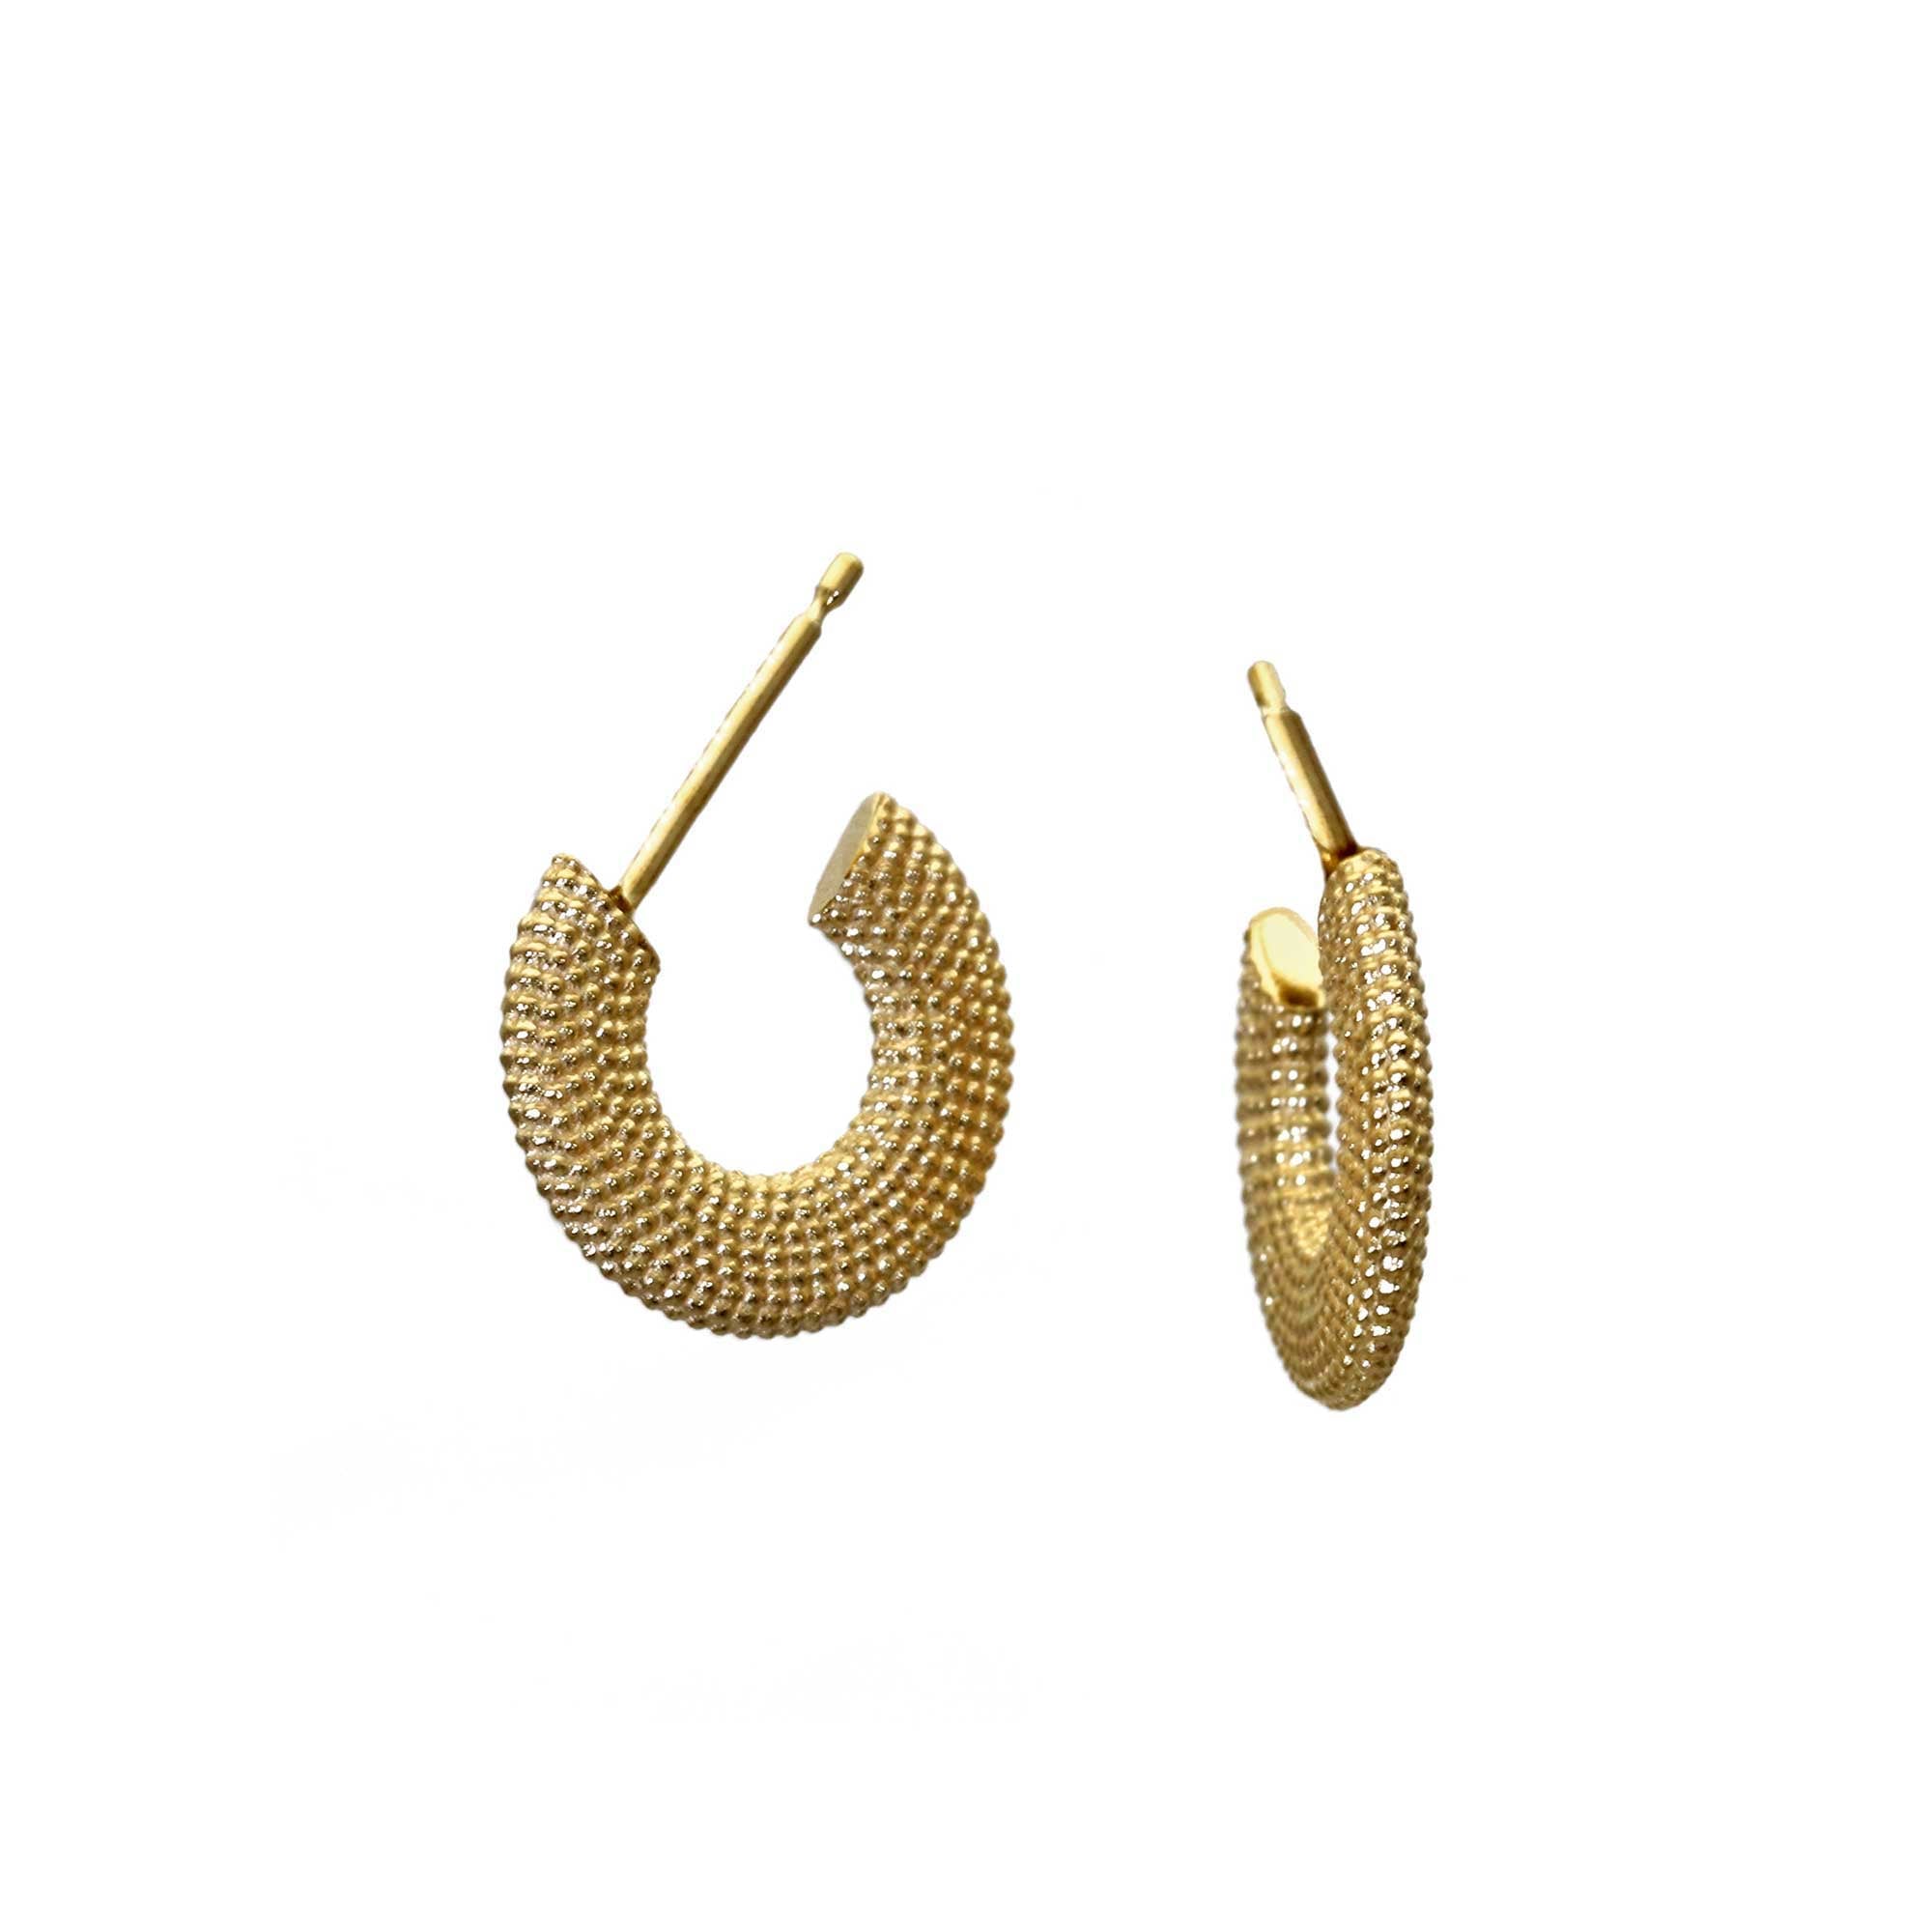 Weol granulated yellow gold chunky hoop earrings